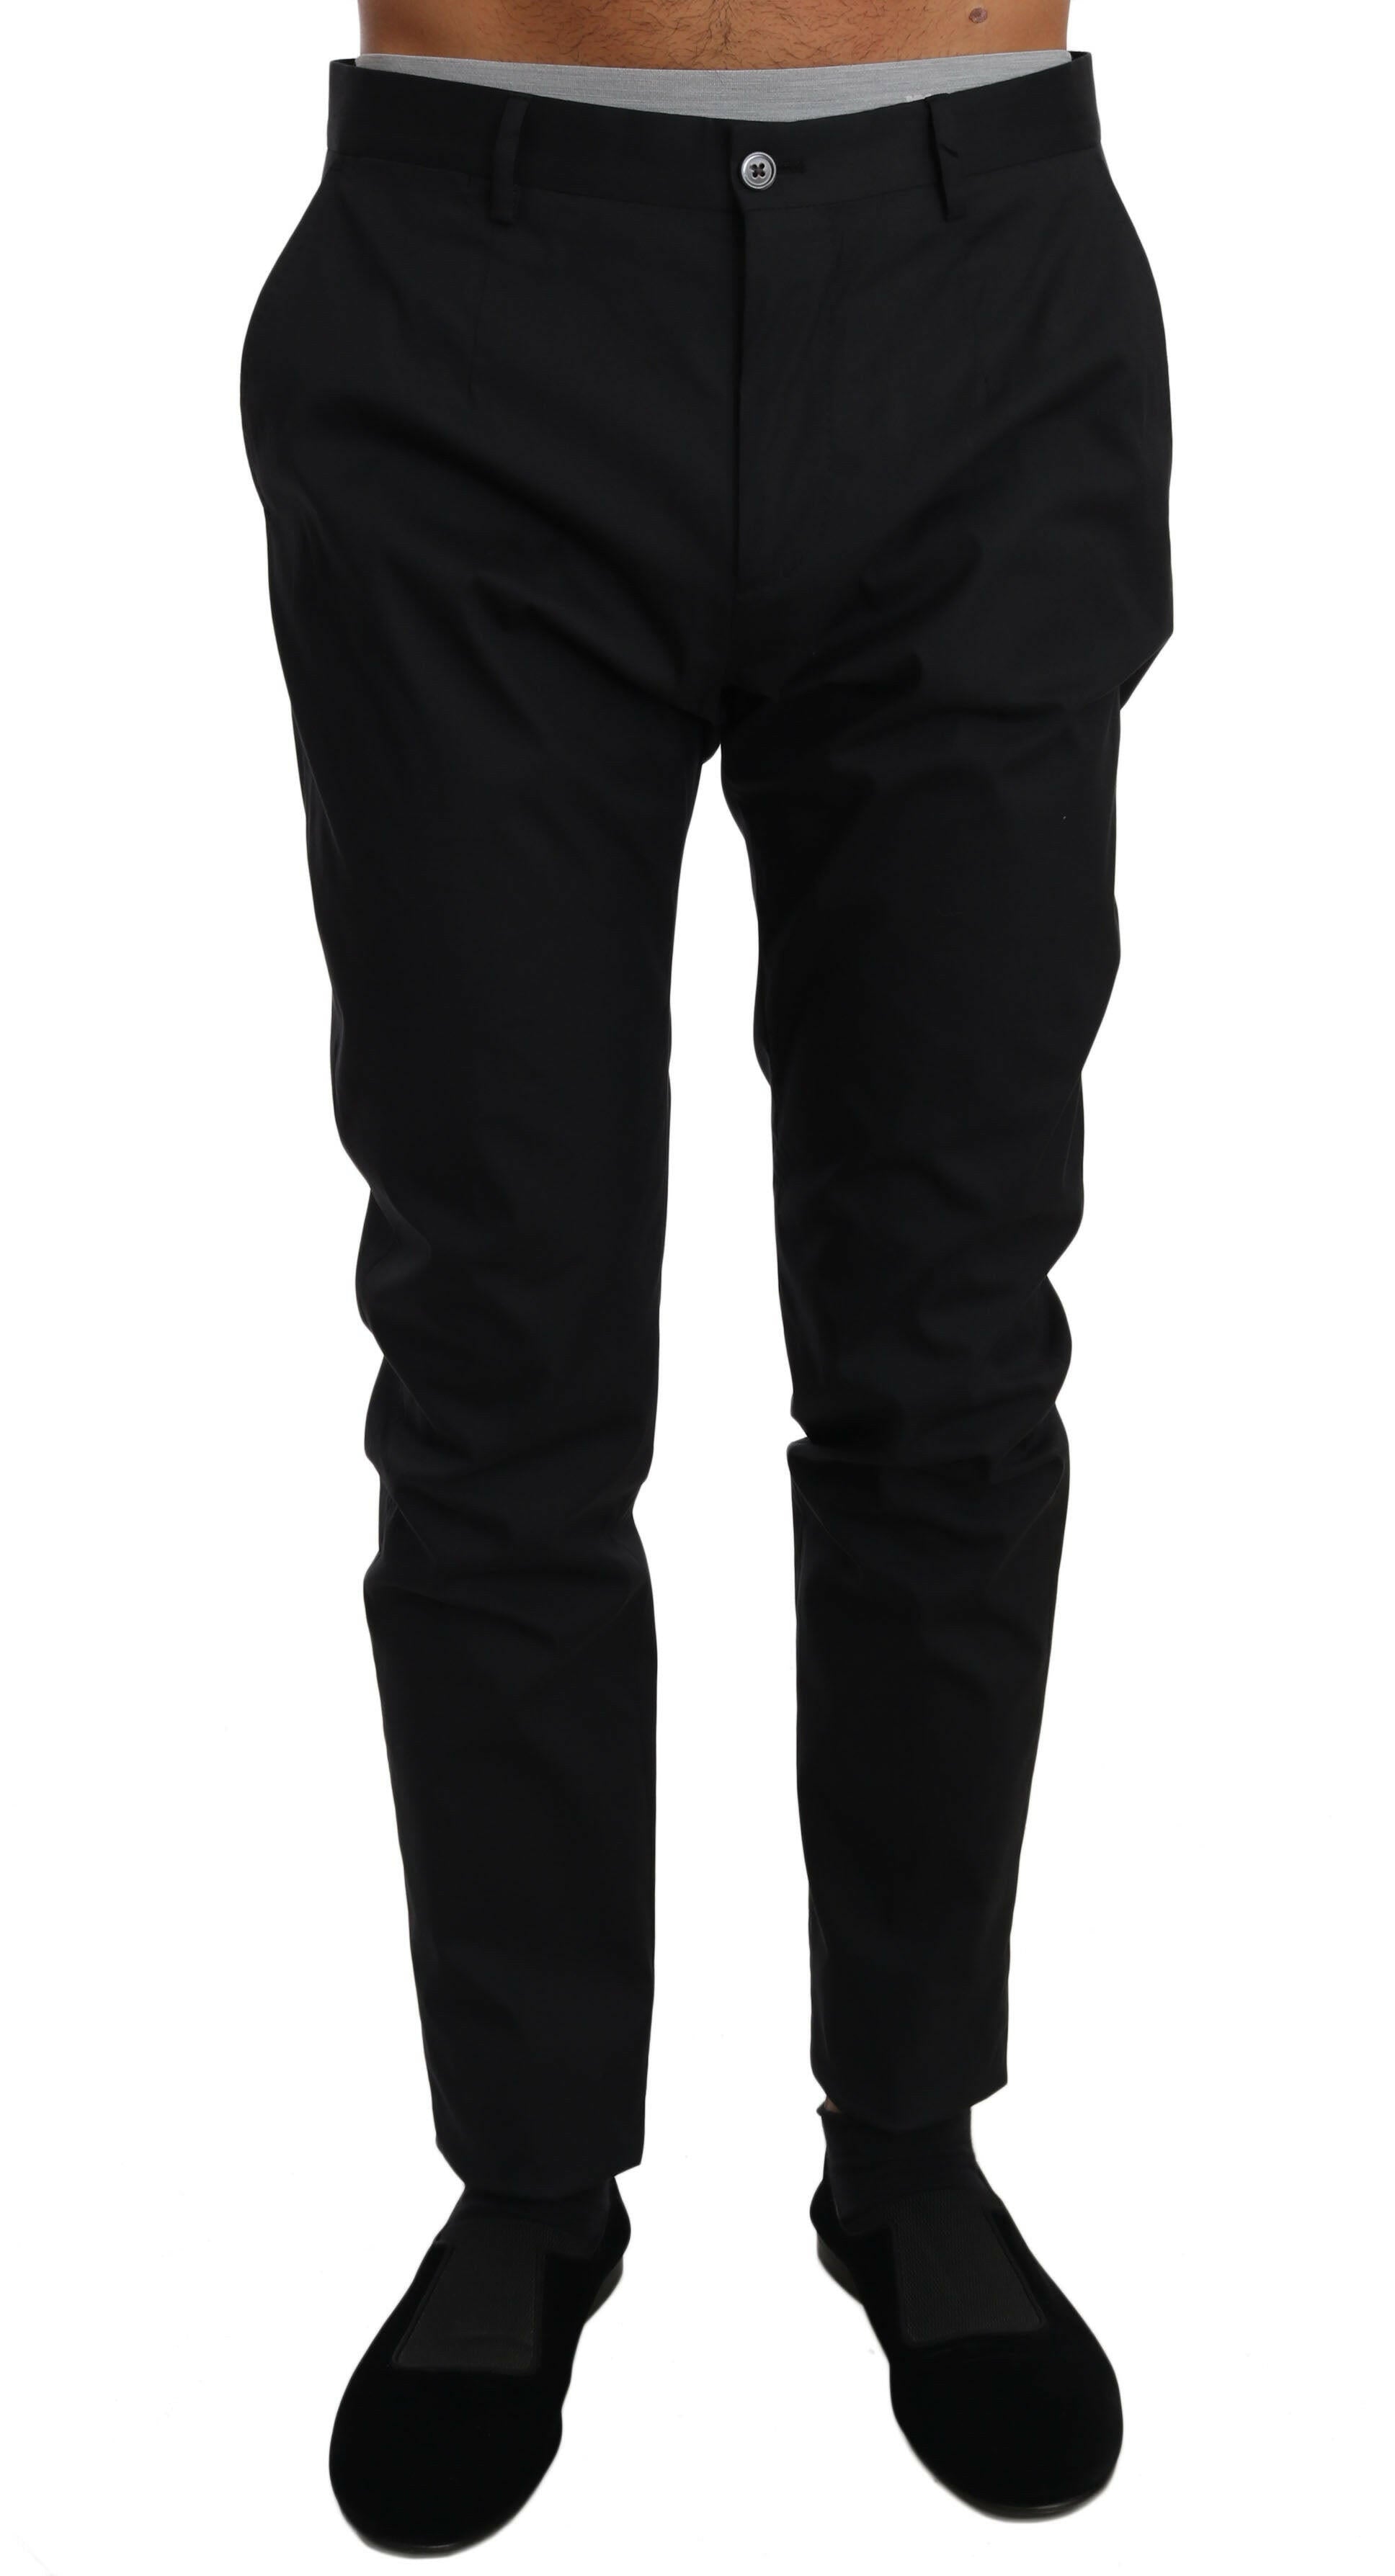 Dolce & Gabbana Black Cotton Stretch Formal Trousers Pants - GENUINE AUTHENTIC BRAND LLC  